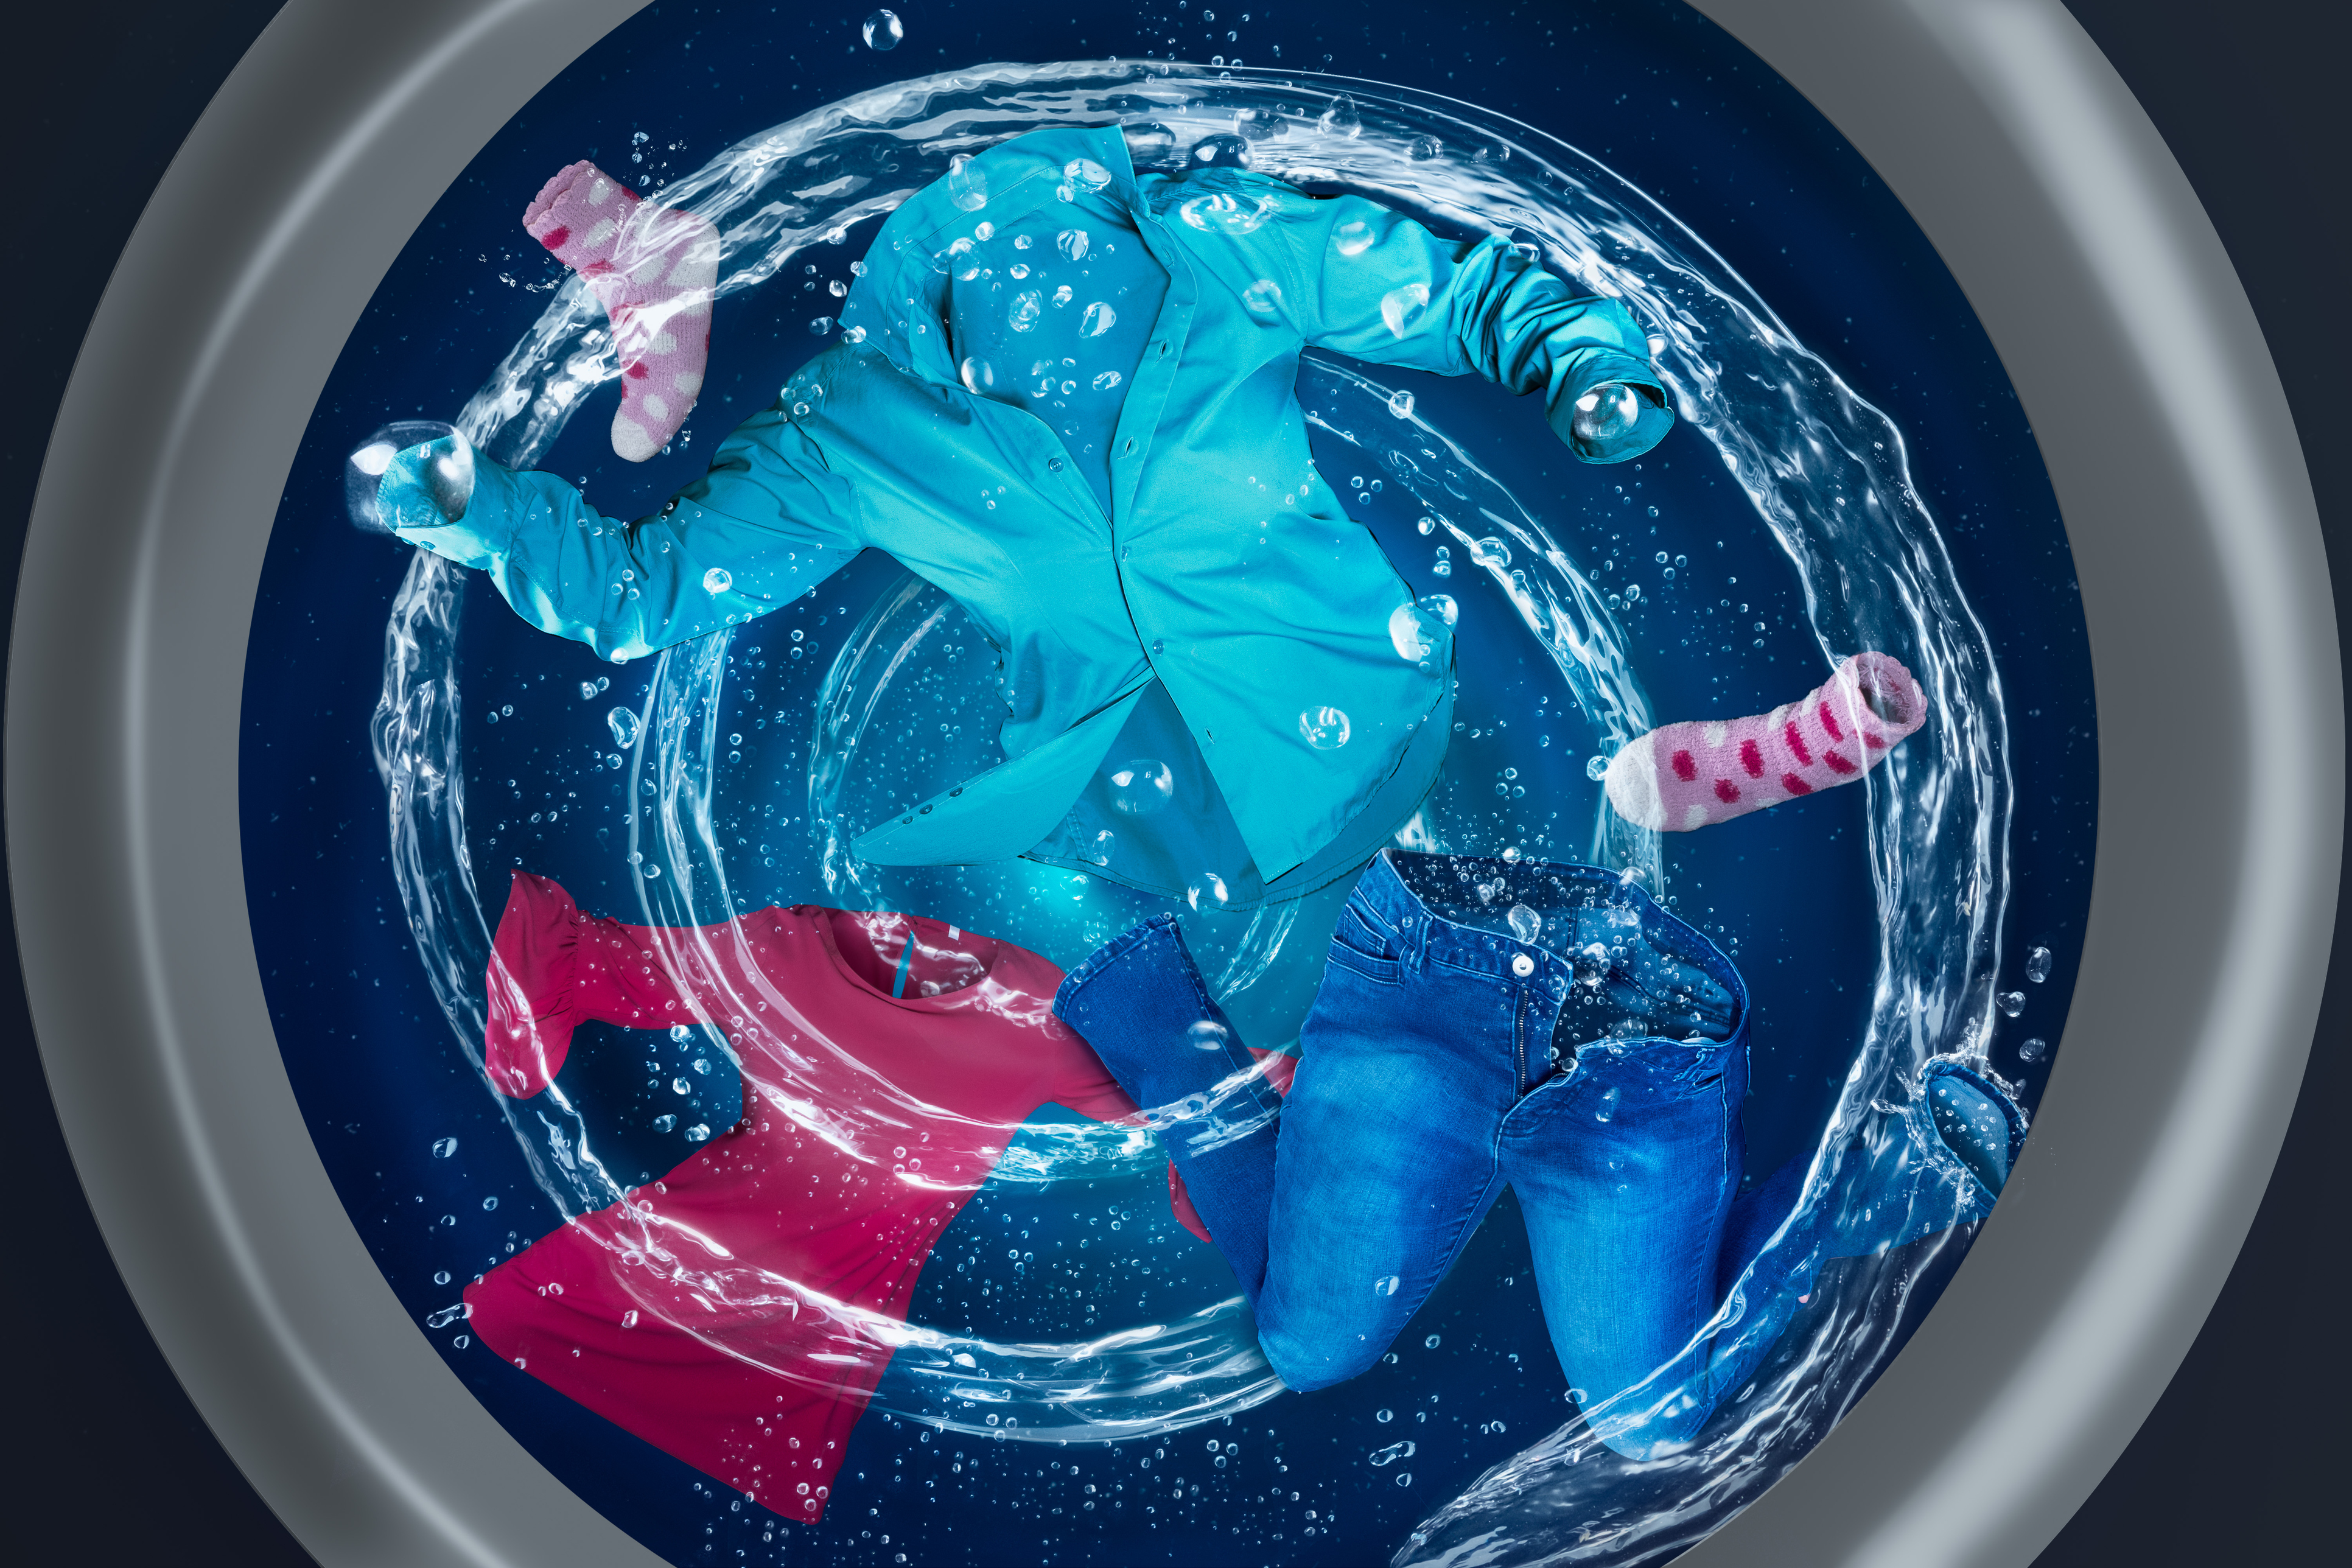 Dishwasher or Washing Machine Not Draining? Here's What to Do. - Blue Star  Plumbing